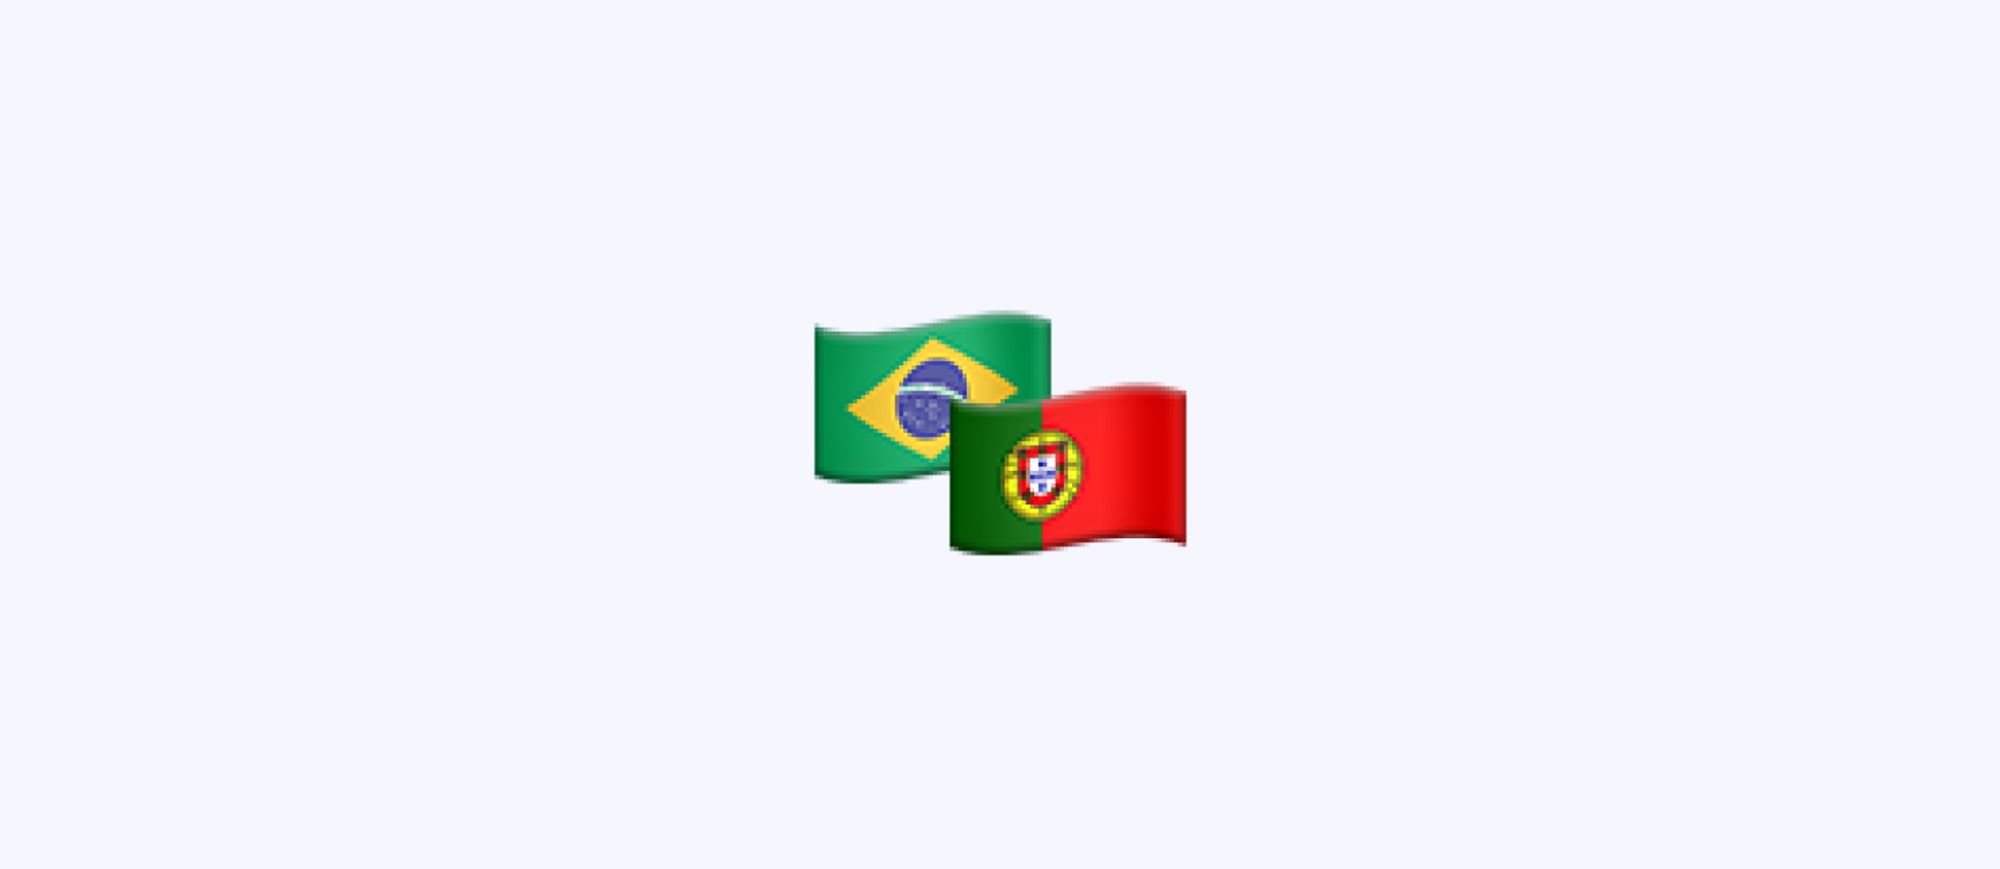 Portuguese Translation